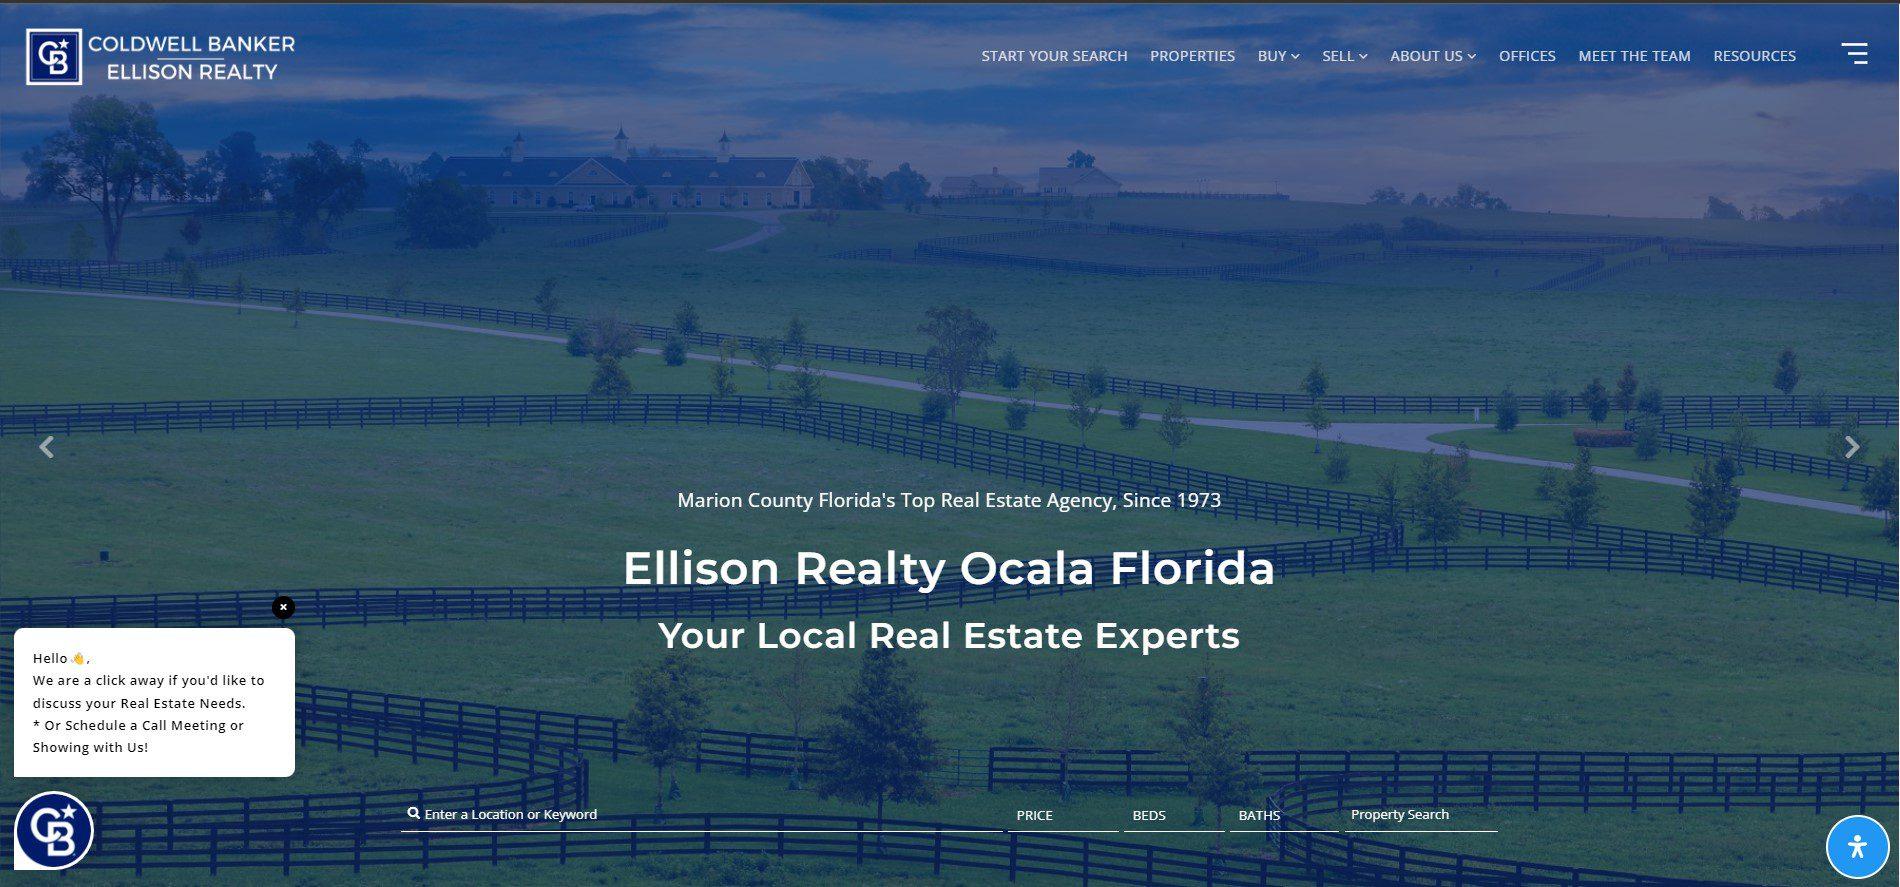 Coldwell Banker Ellison Realty Ocala Florida